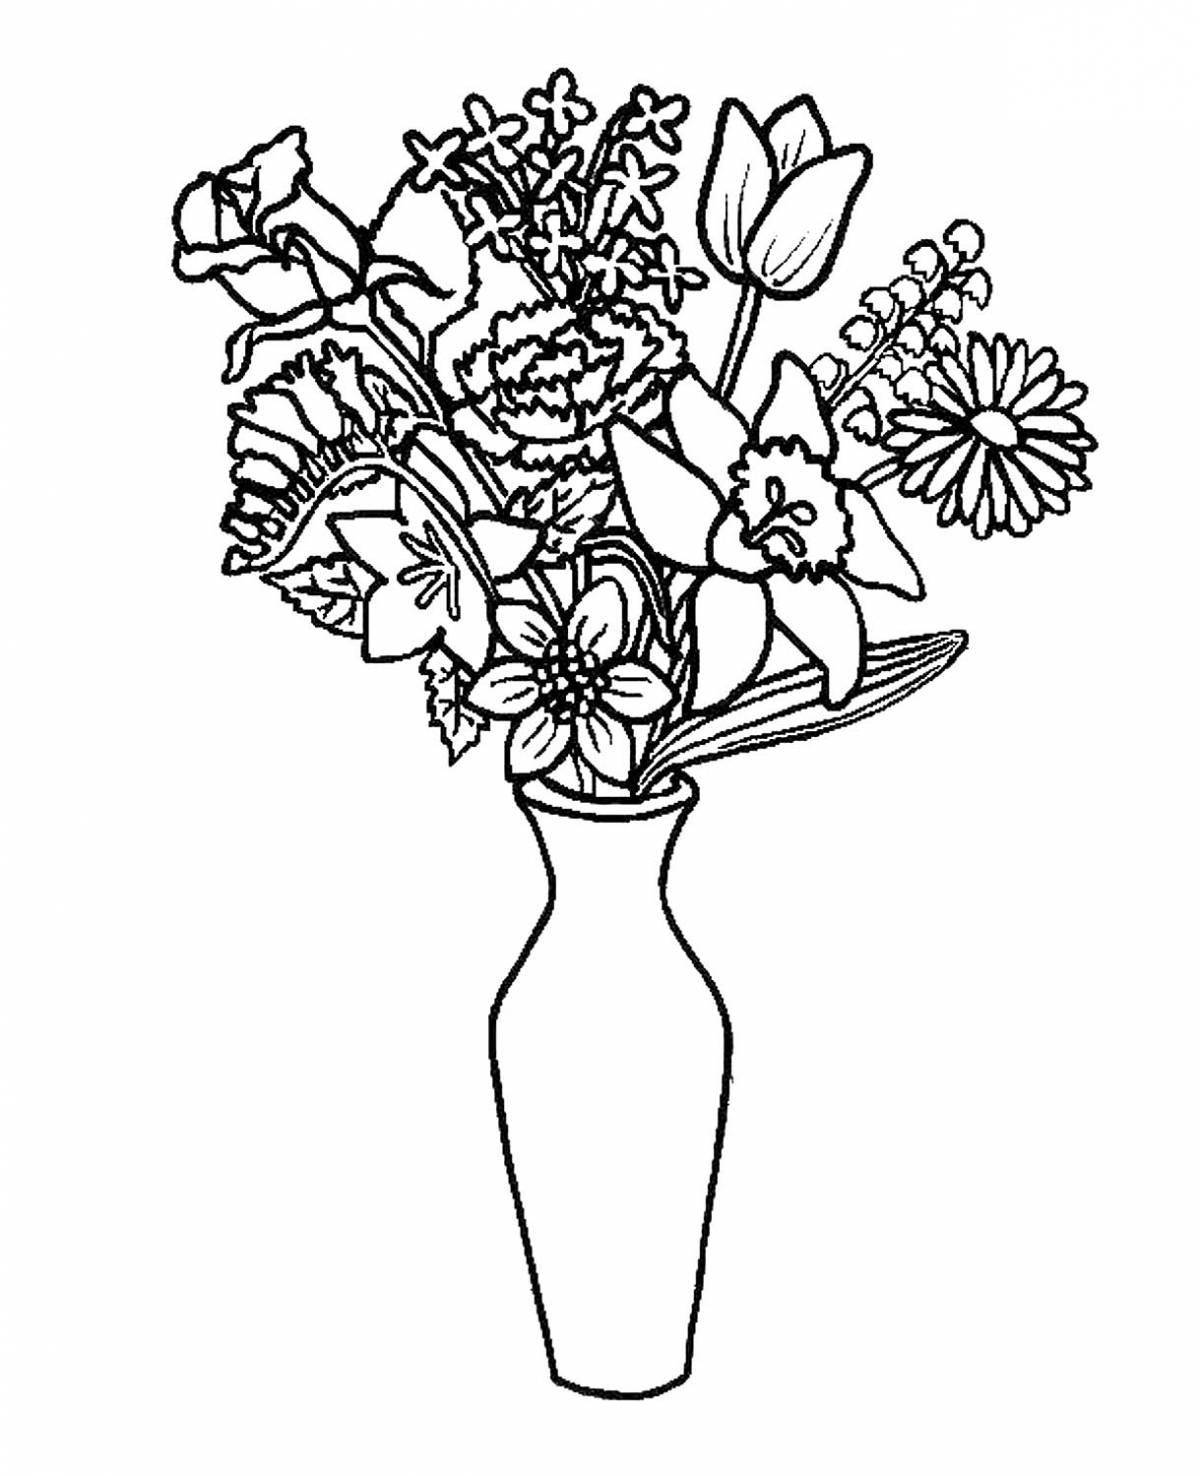 Delightful coloring flower in a vase